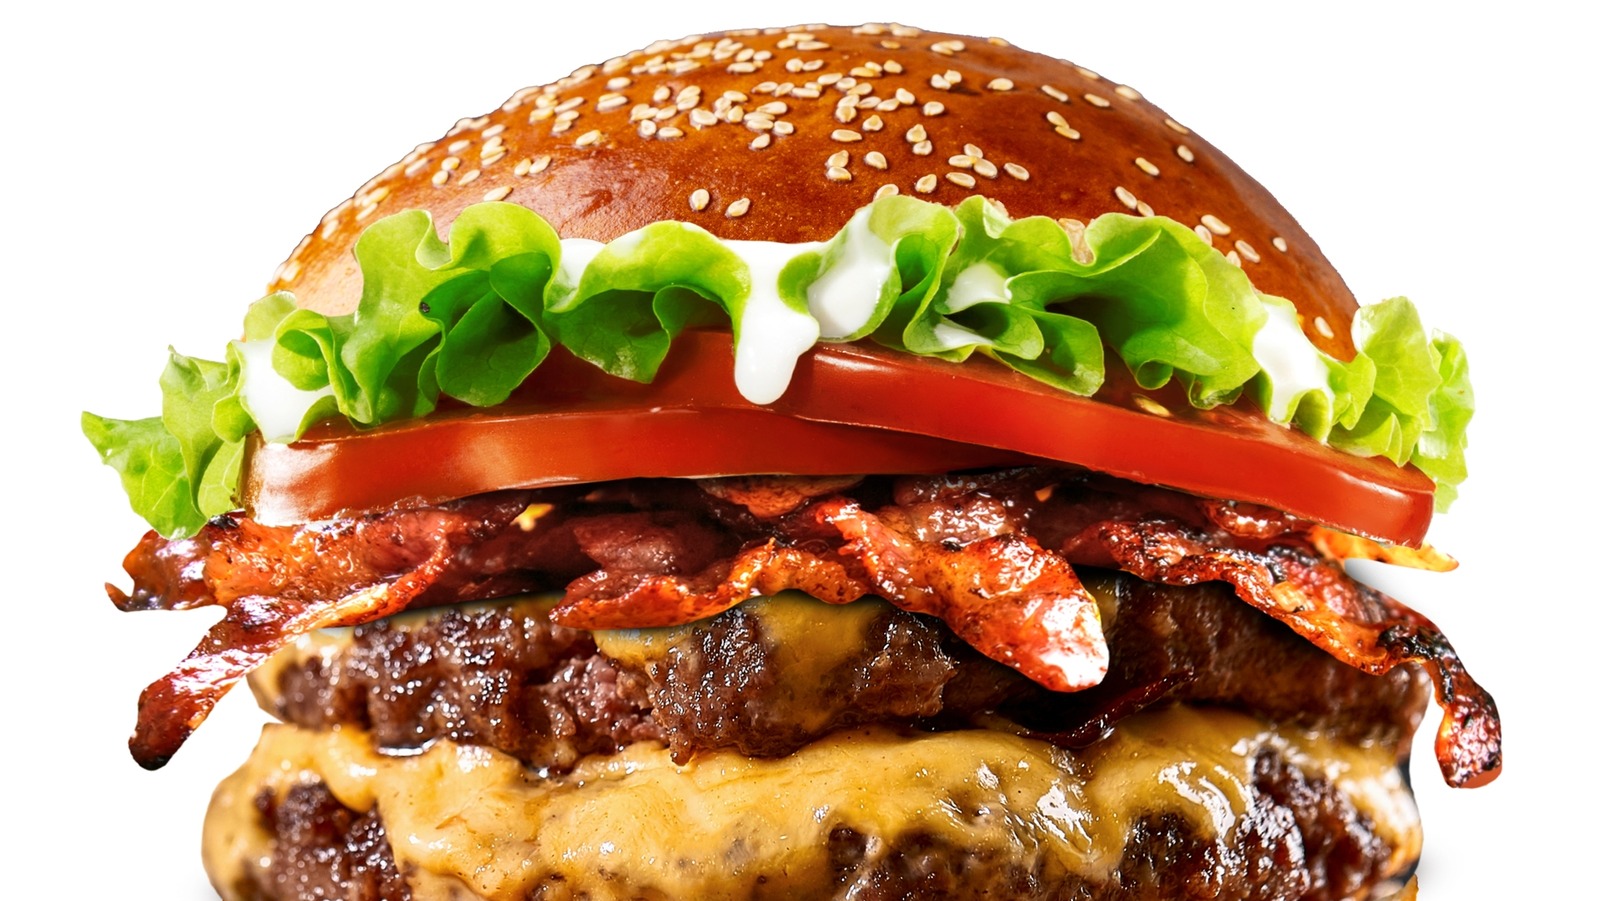 Custom Burger Blends Dominate Grilling Season